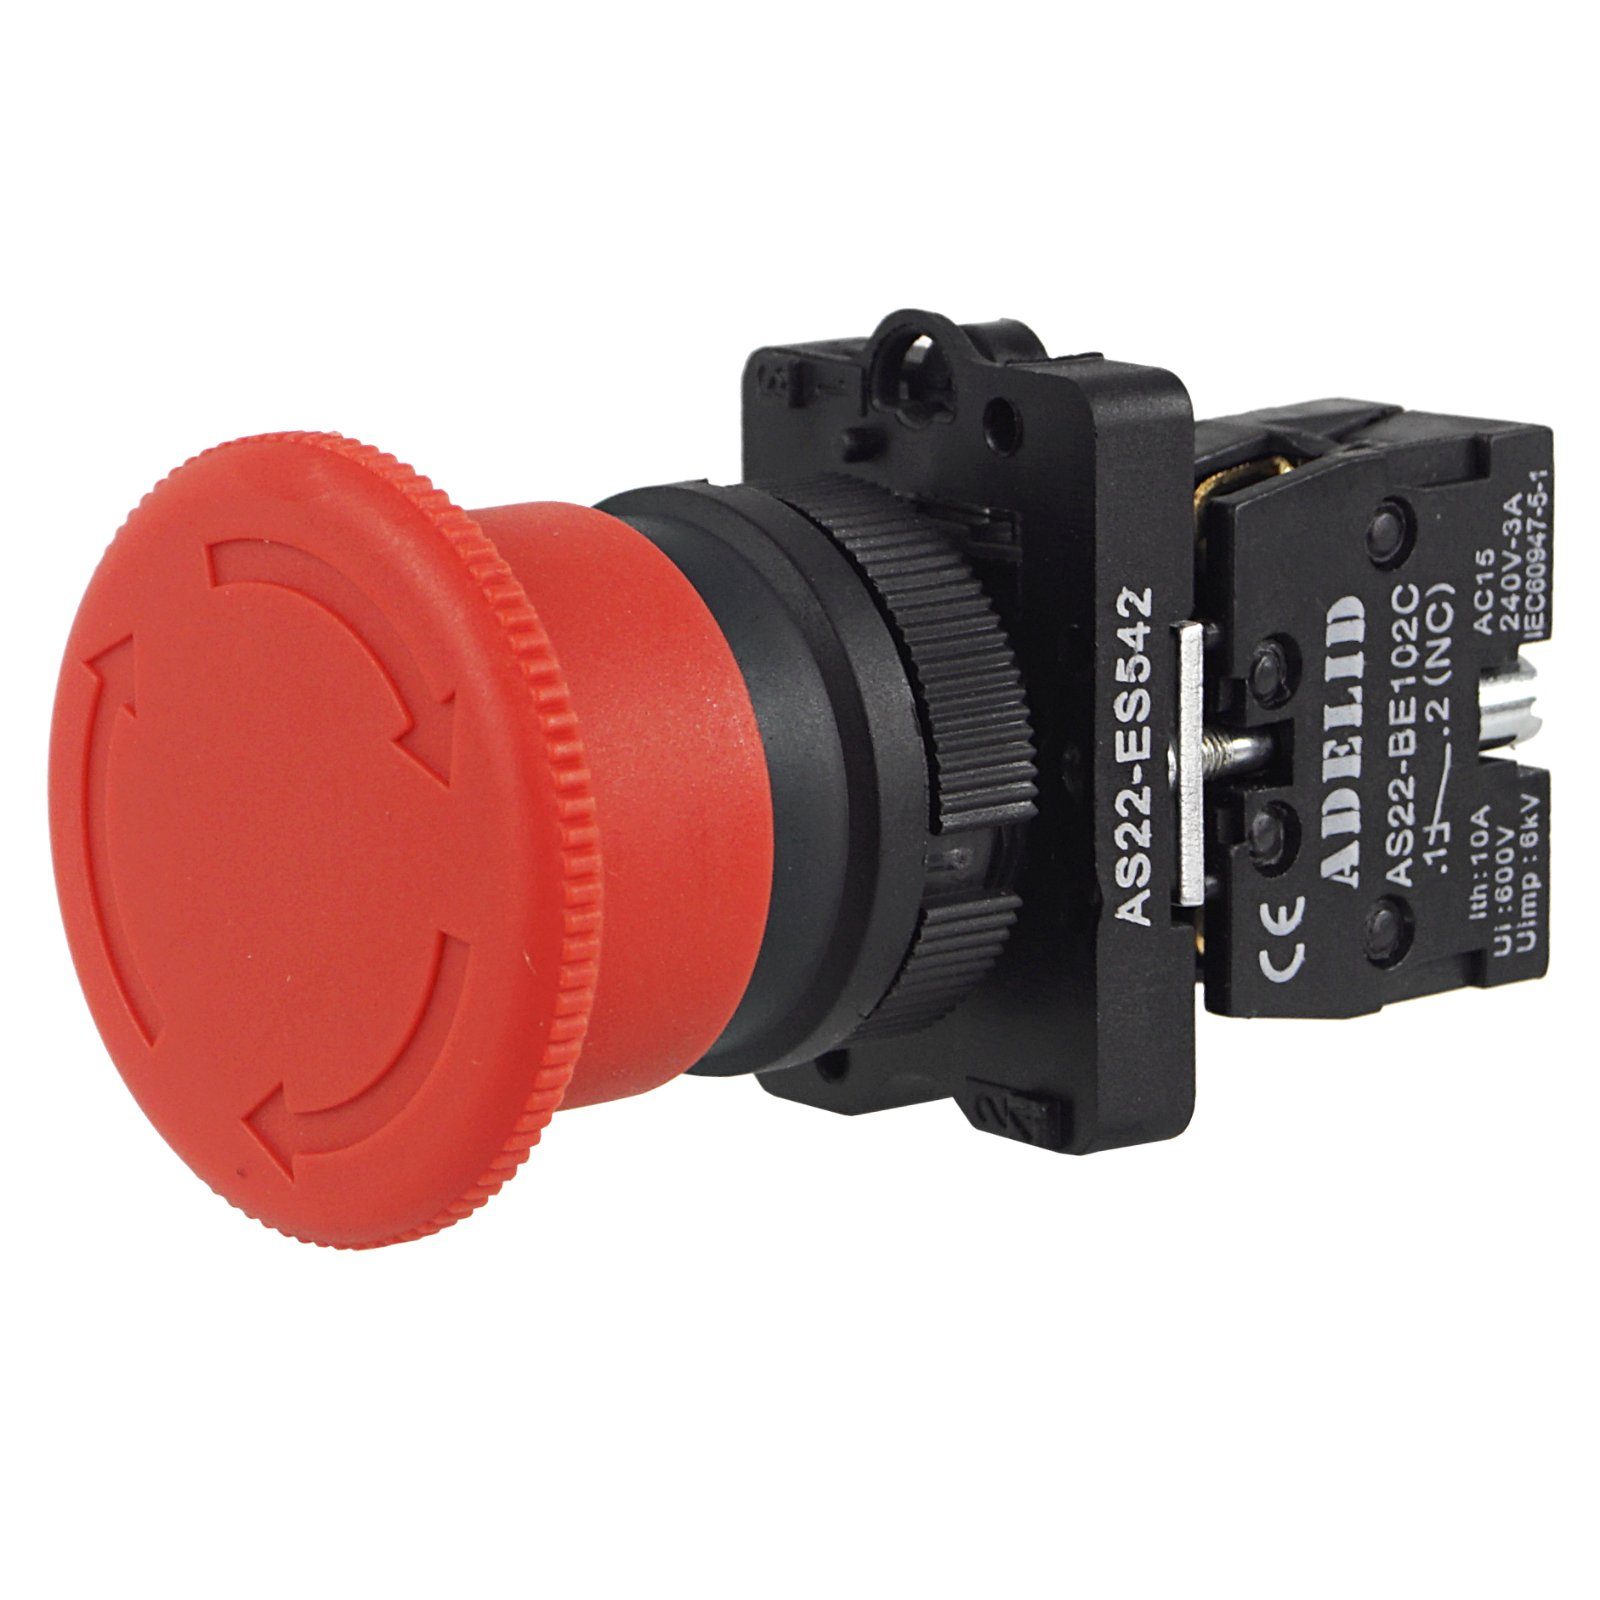 ADELID Schalter, Not-Aus-Druckschalter Taster Stoppschalter Roter Pilz 10A 600V 1NC 22mm mit Kunststoffflansche